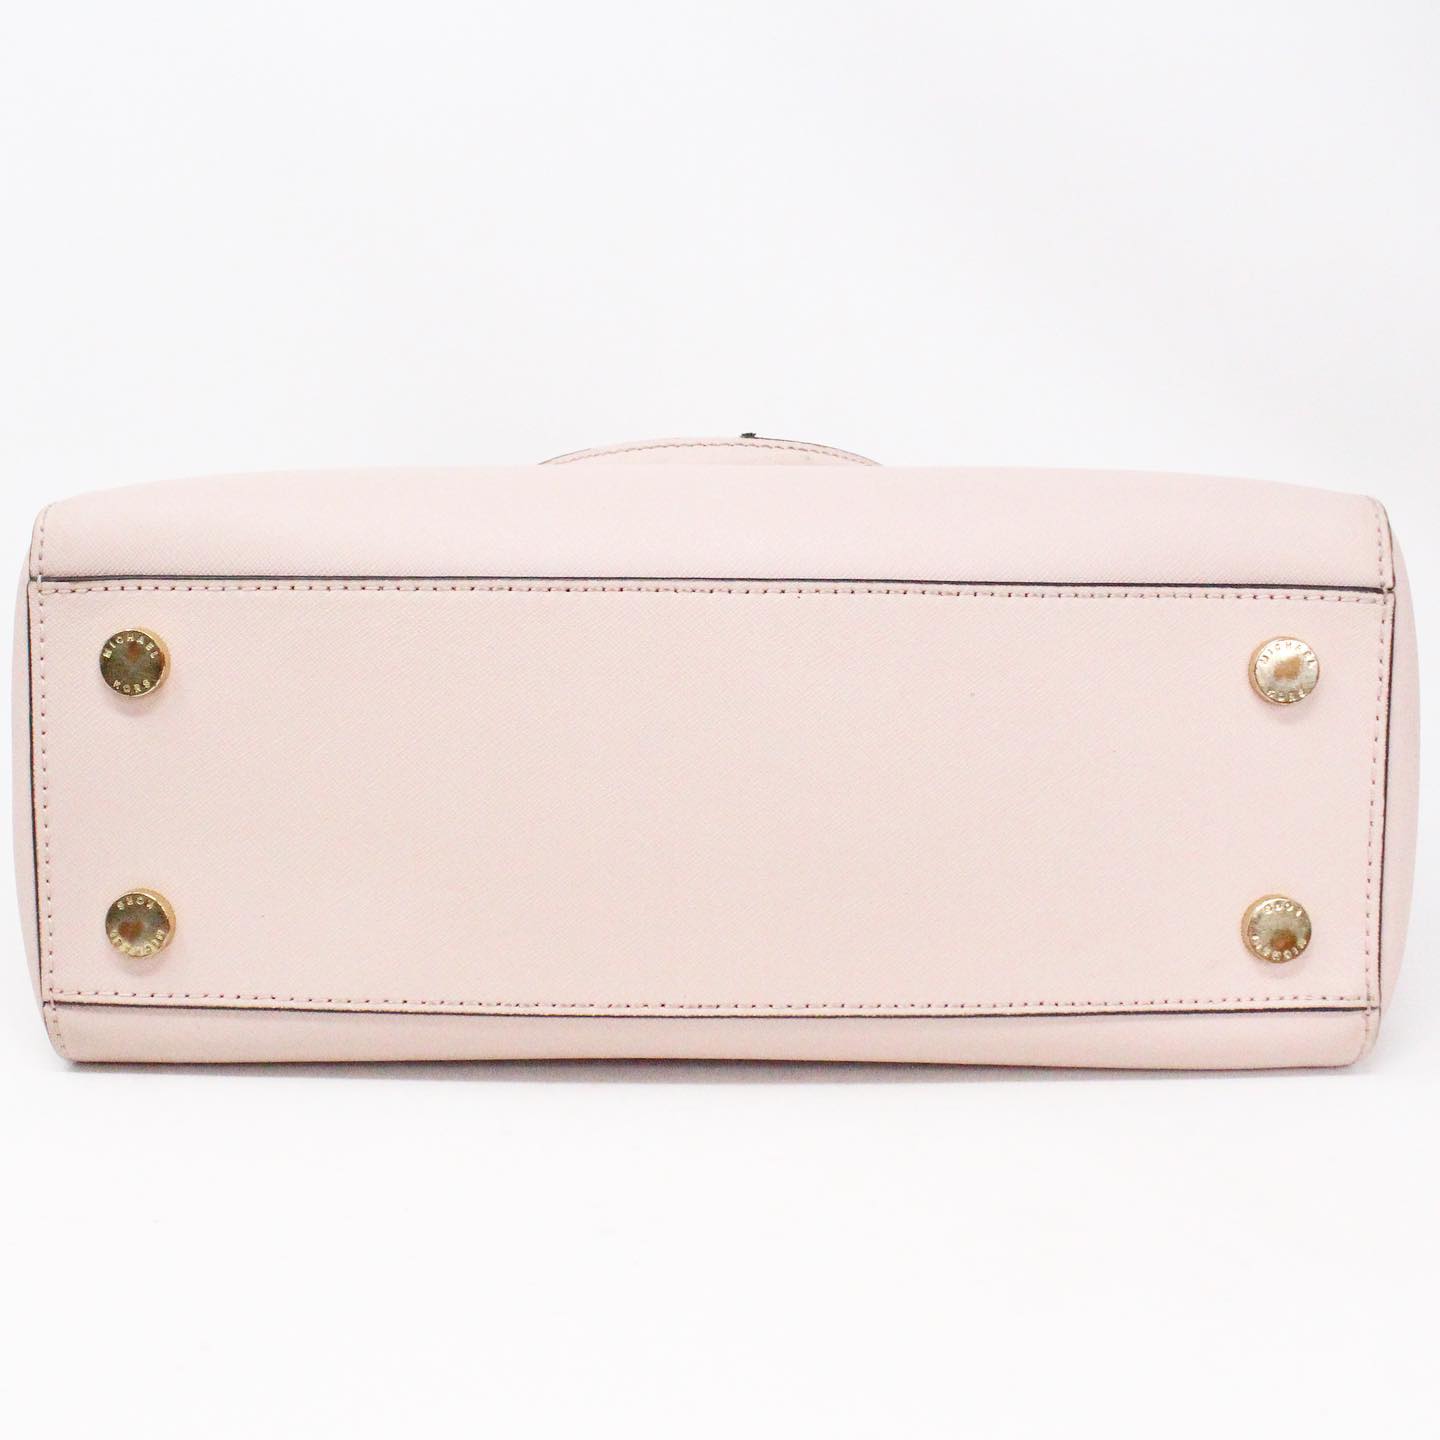 *ON SALE* MICHAEL KORS #36063 Blush Pink Saffiano Leather Handbag with Strap